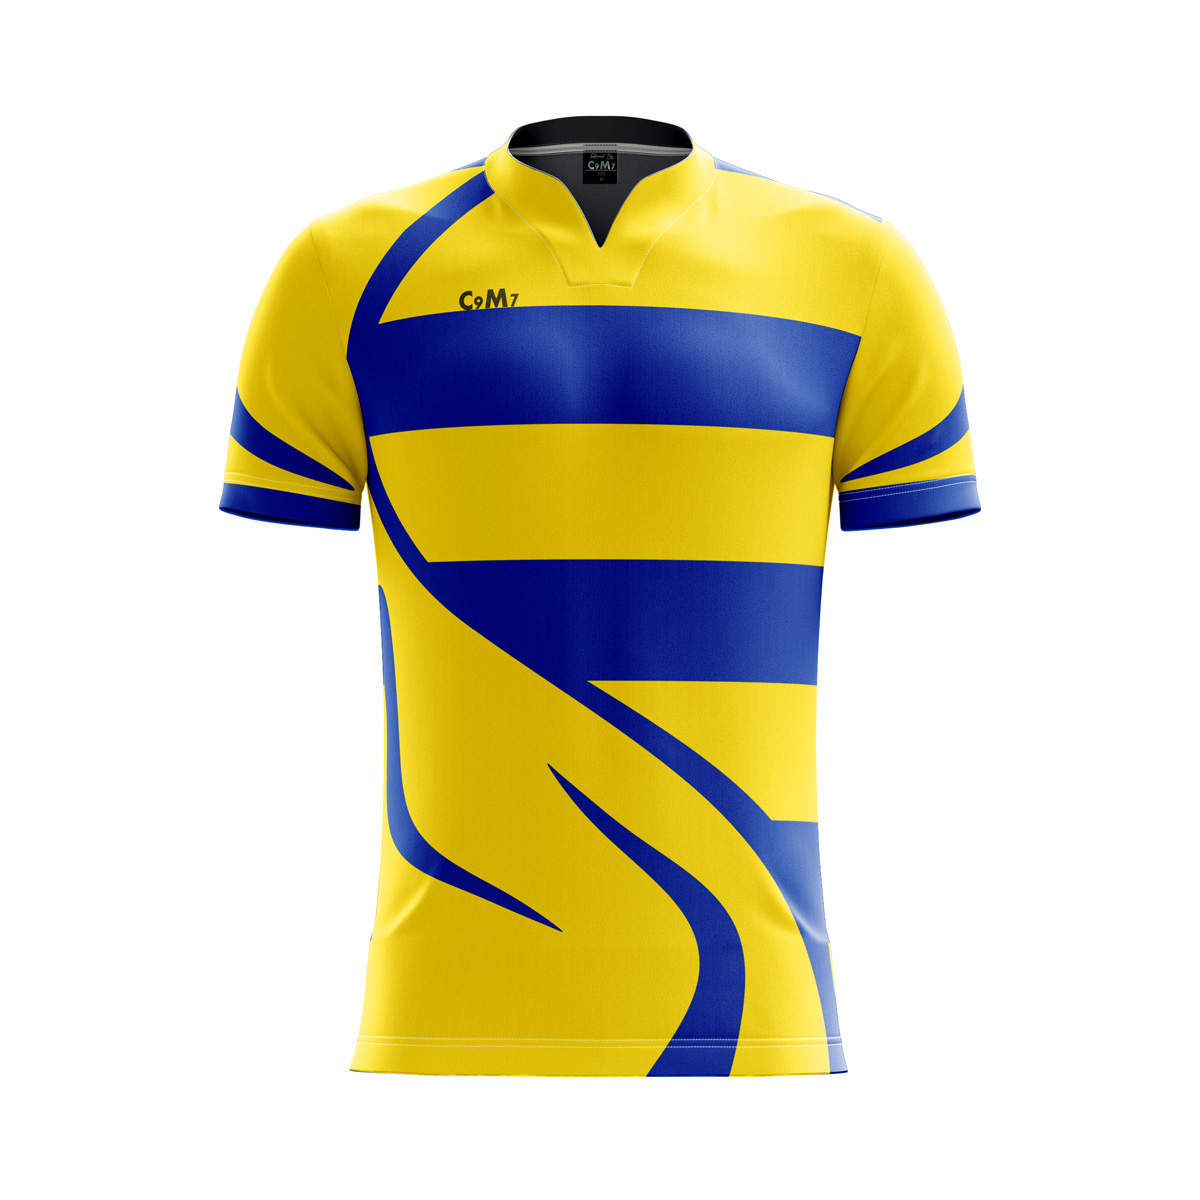 yellow football jersey design